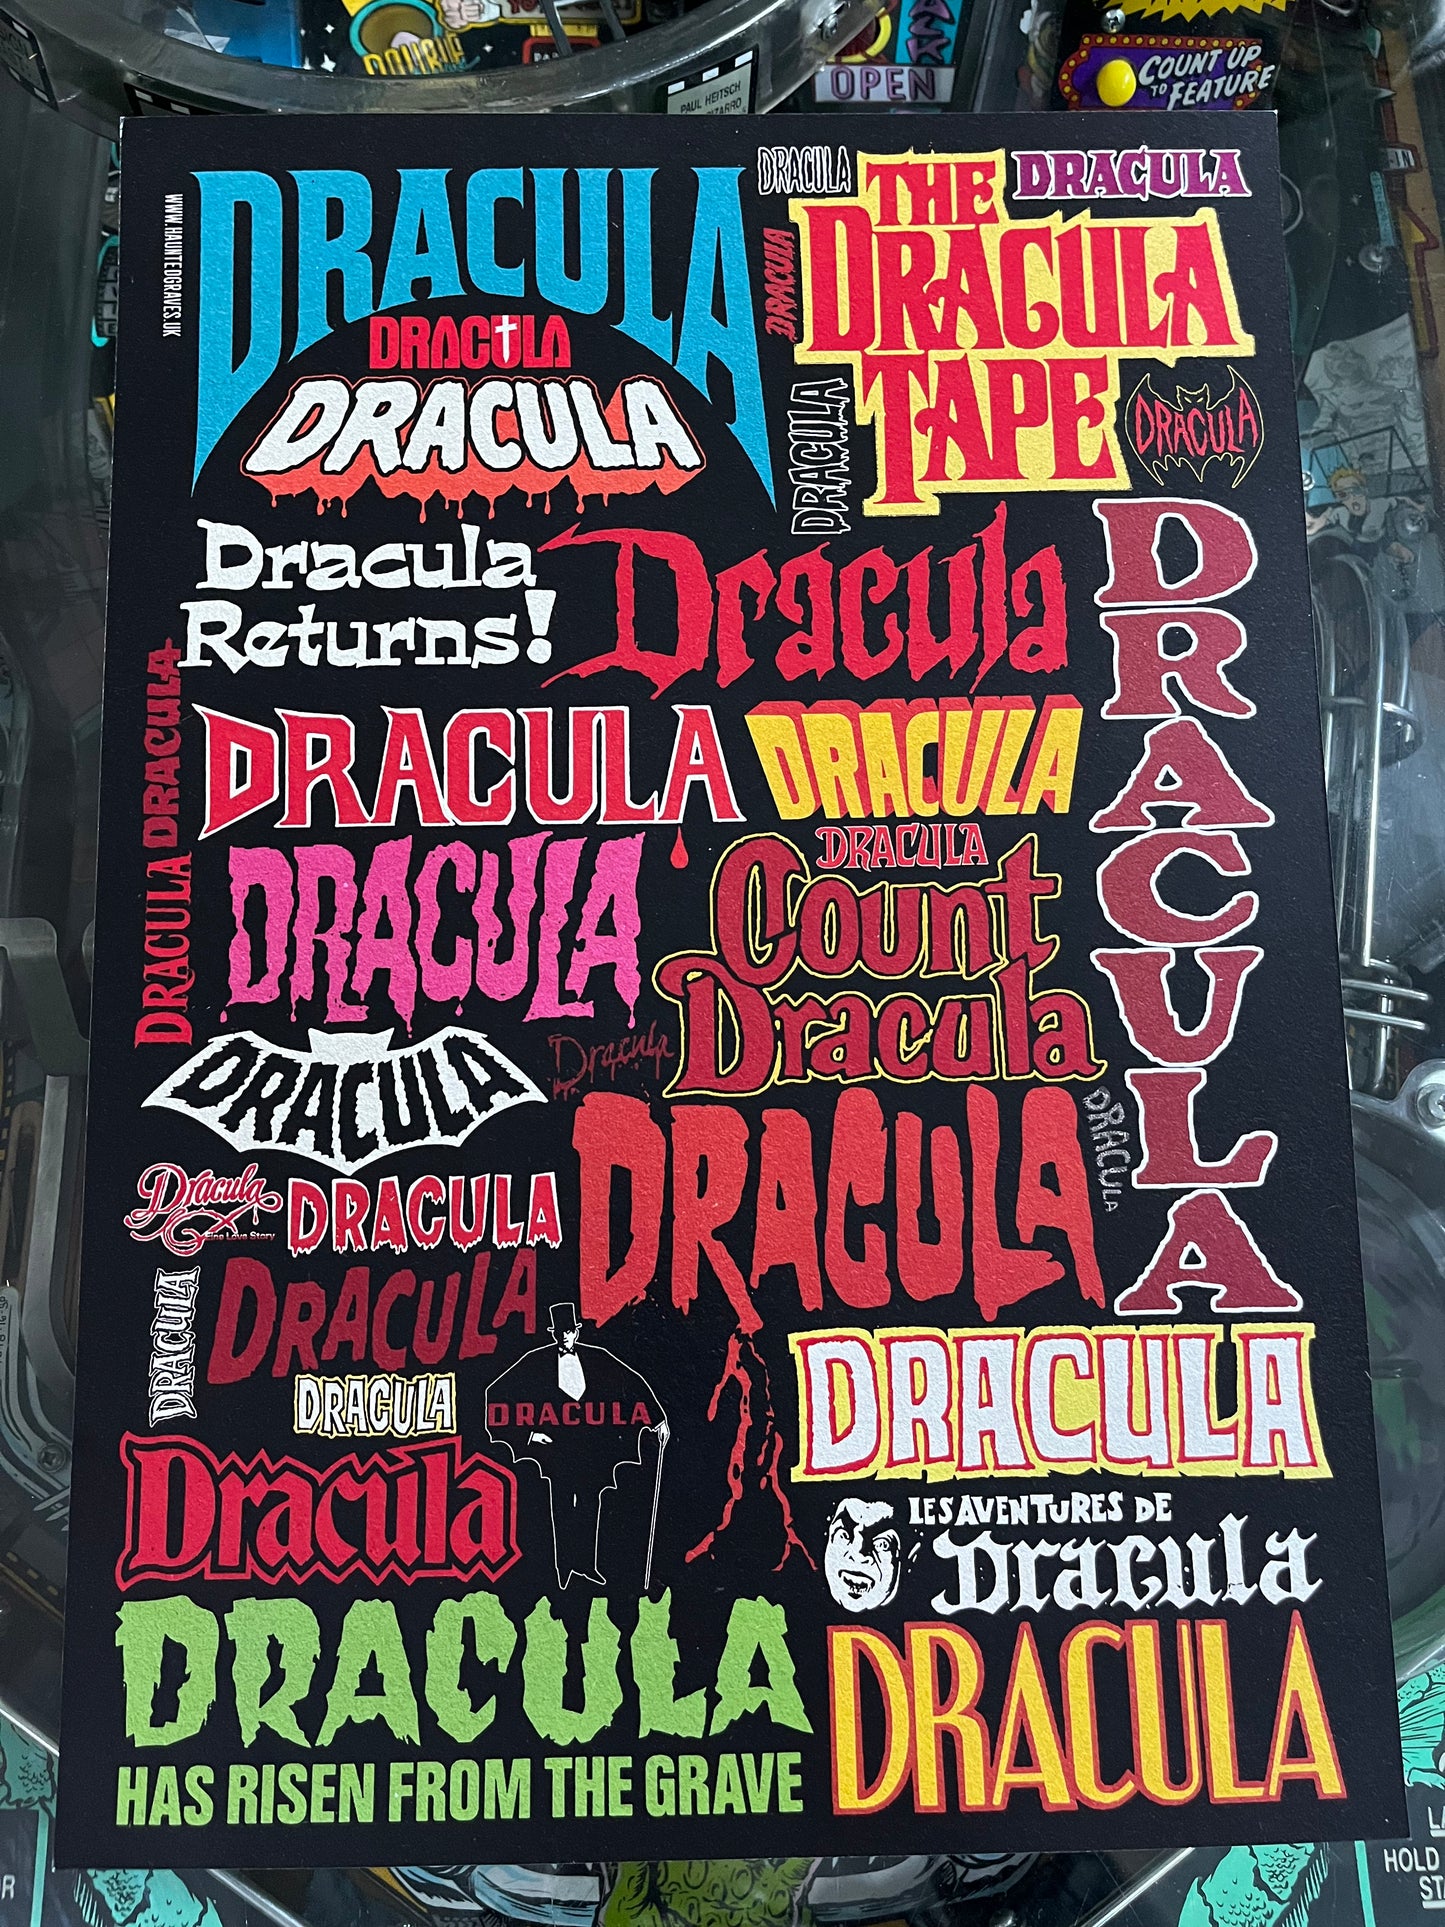 Dracula's name print